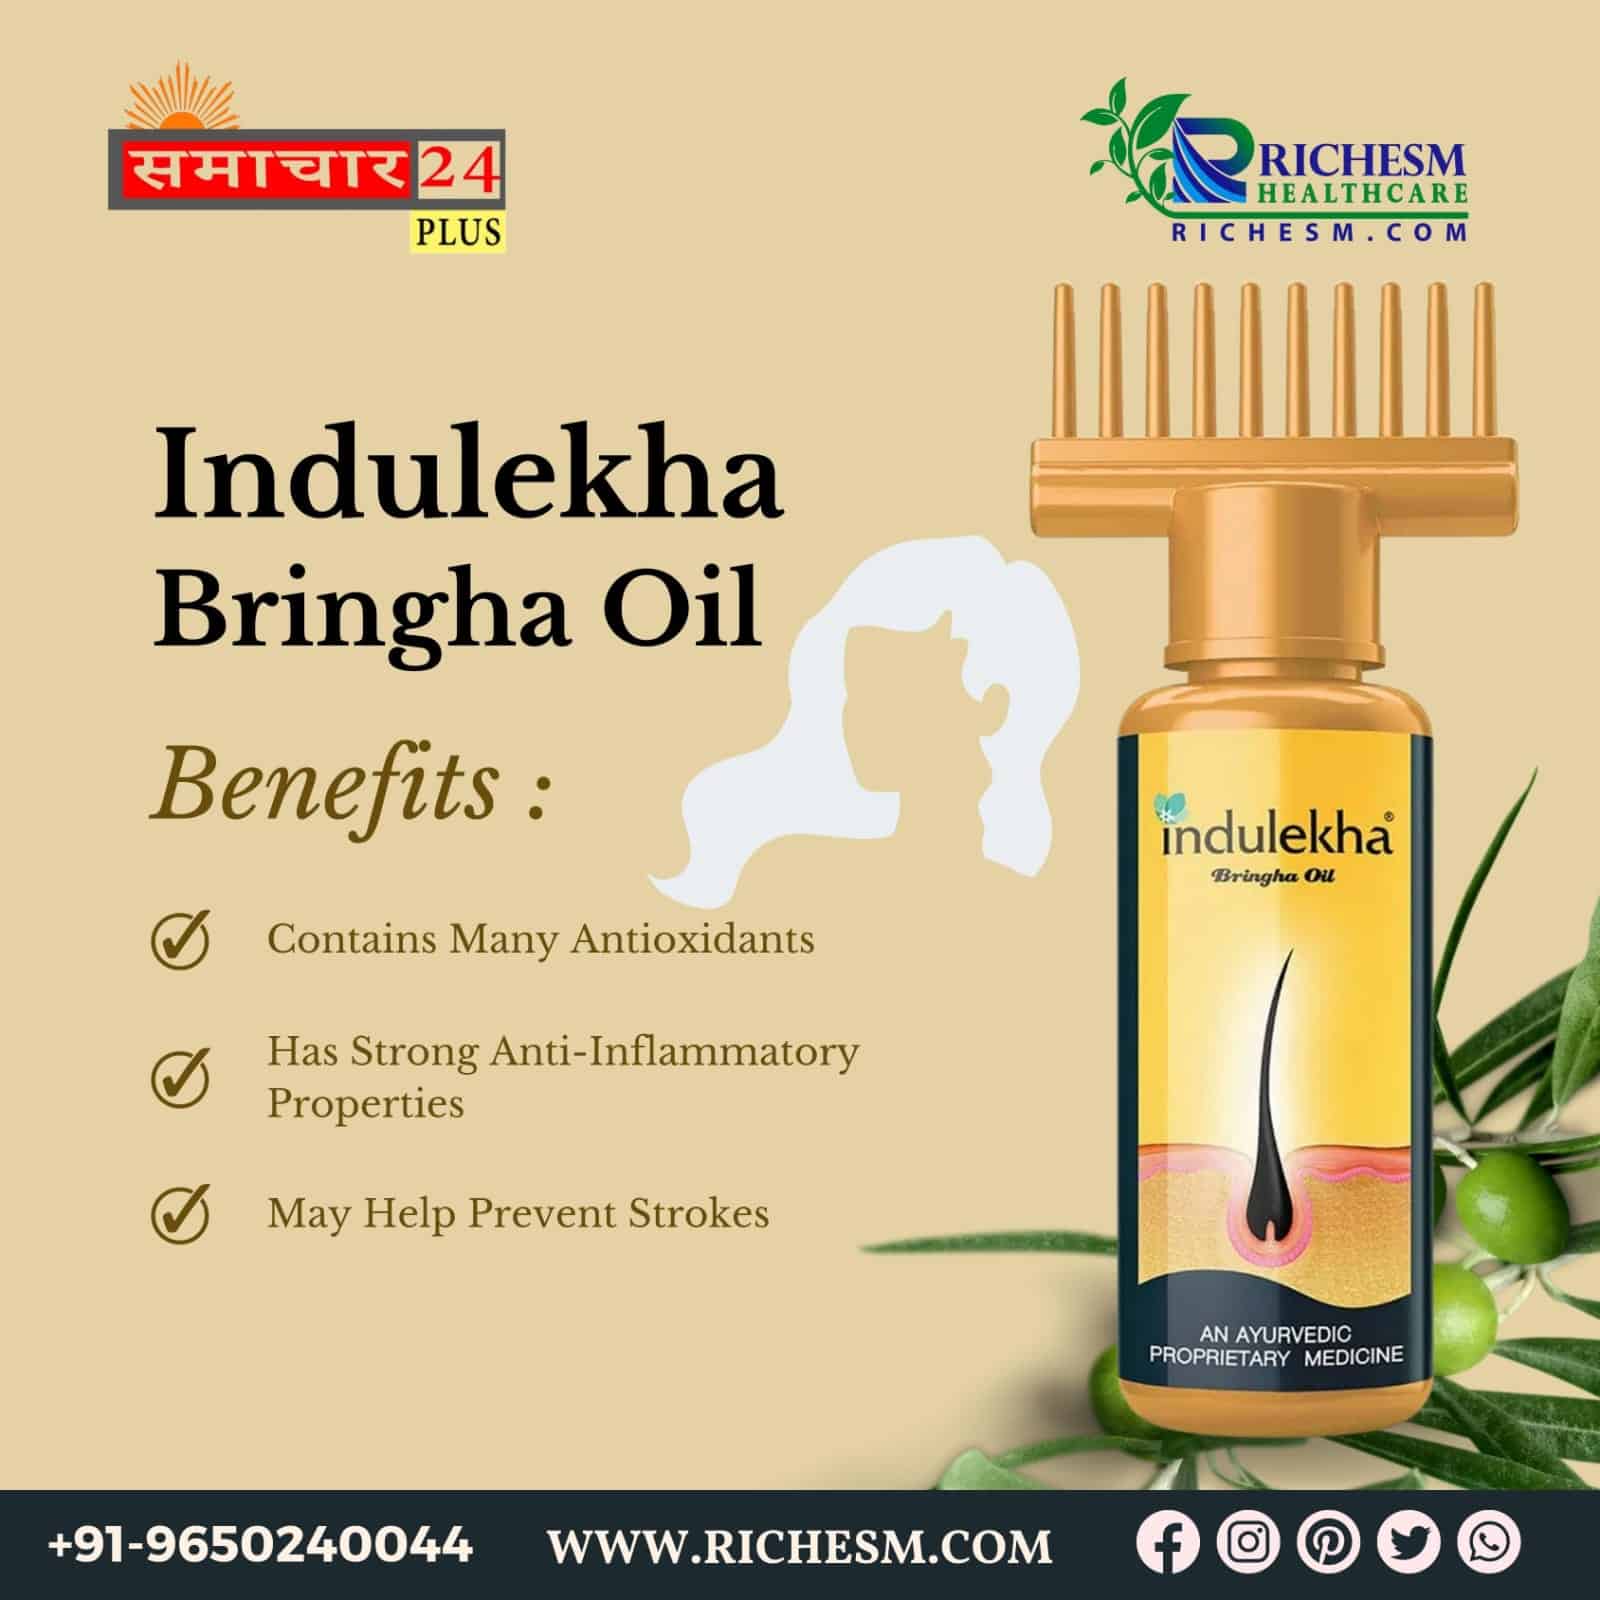 Buy Indulekha Bringha Oil From RichesM